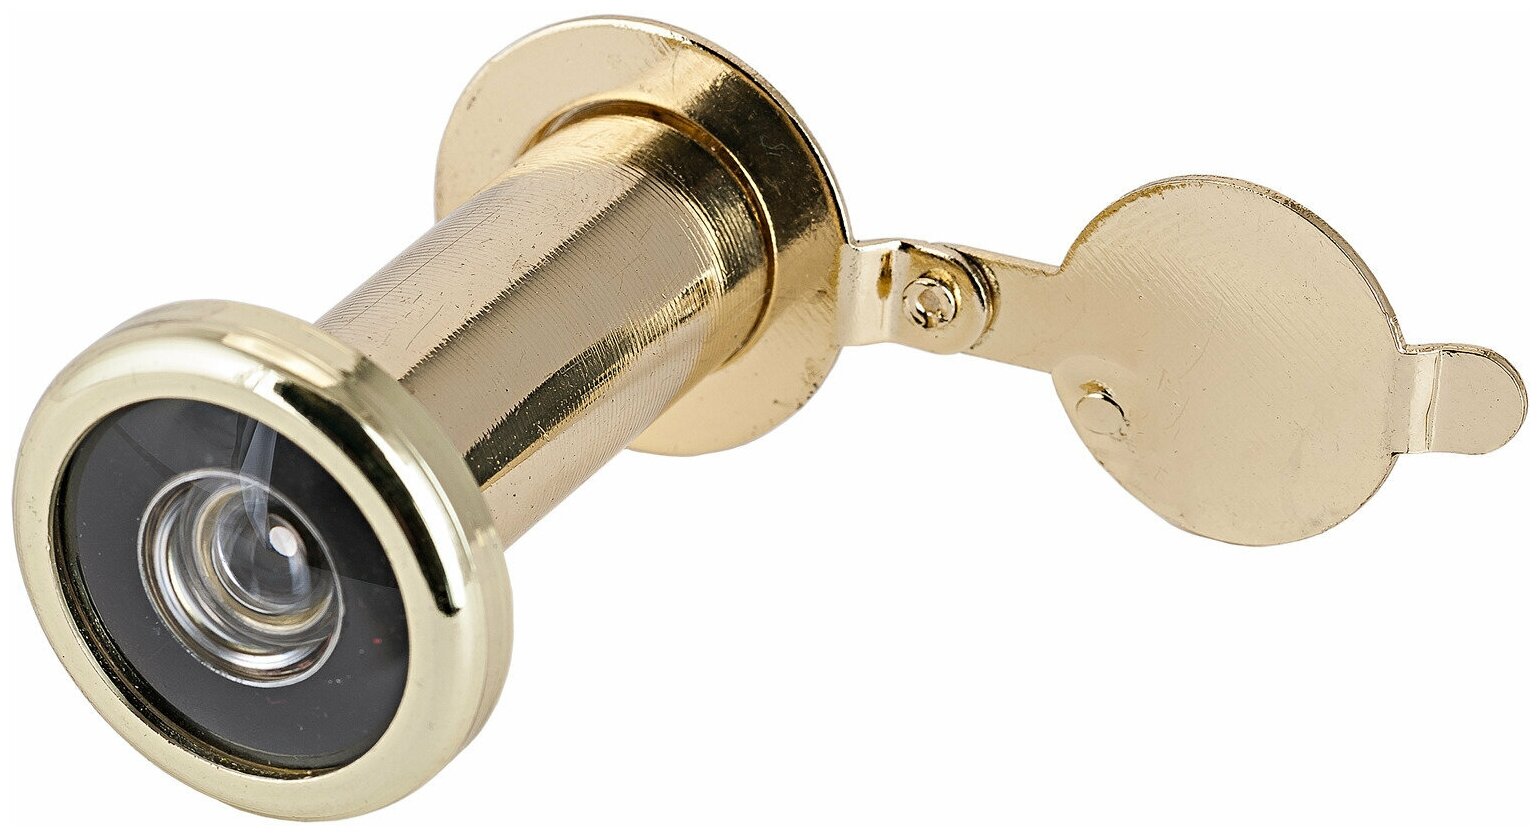 Глазок дверной для дверей 35-50 мм аллюр ГД-2 БШт, диаметр 14 мм, цвет золото